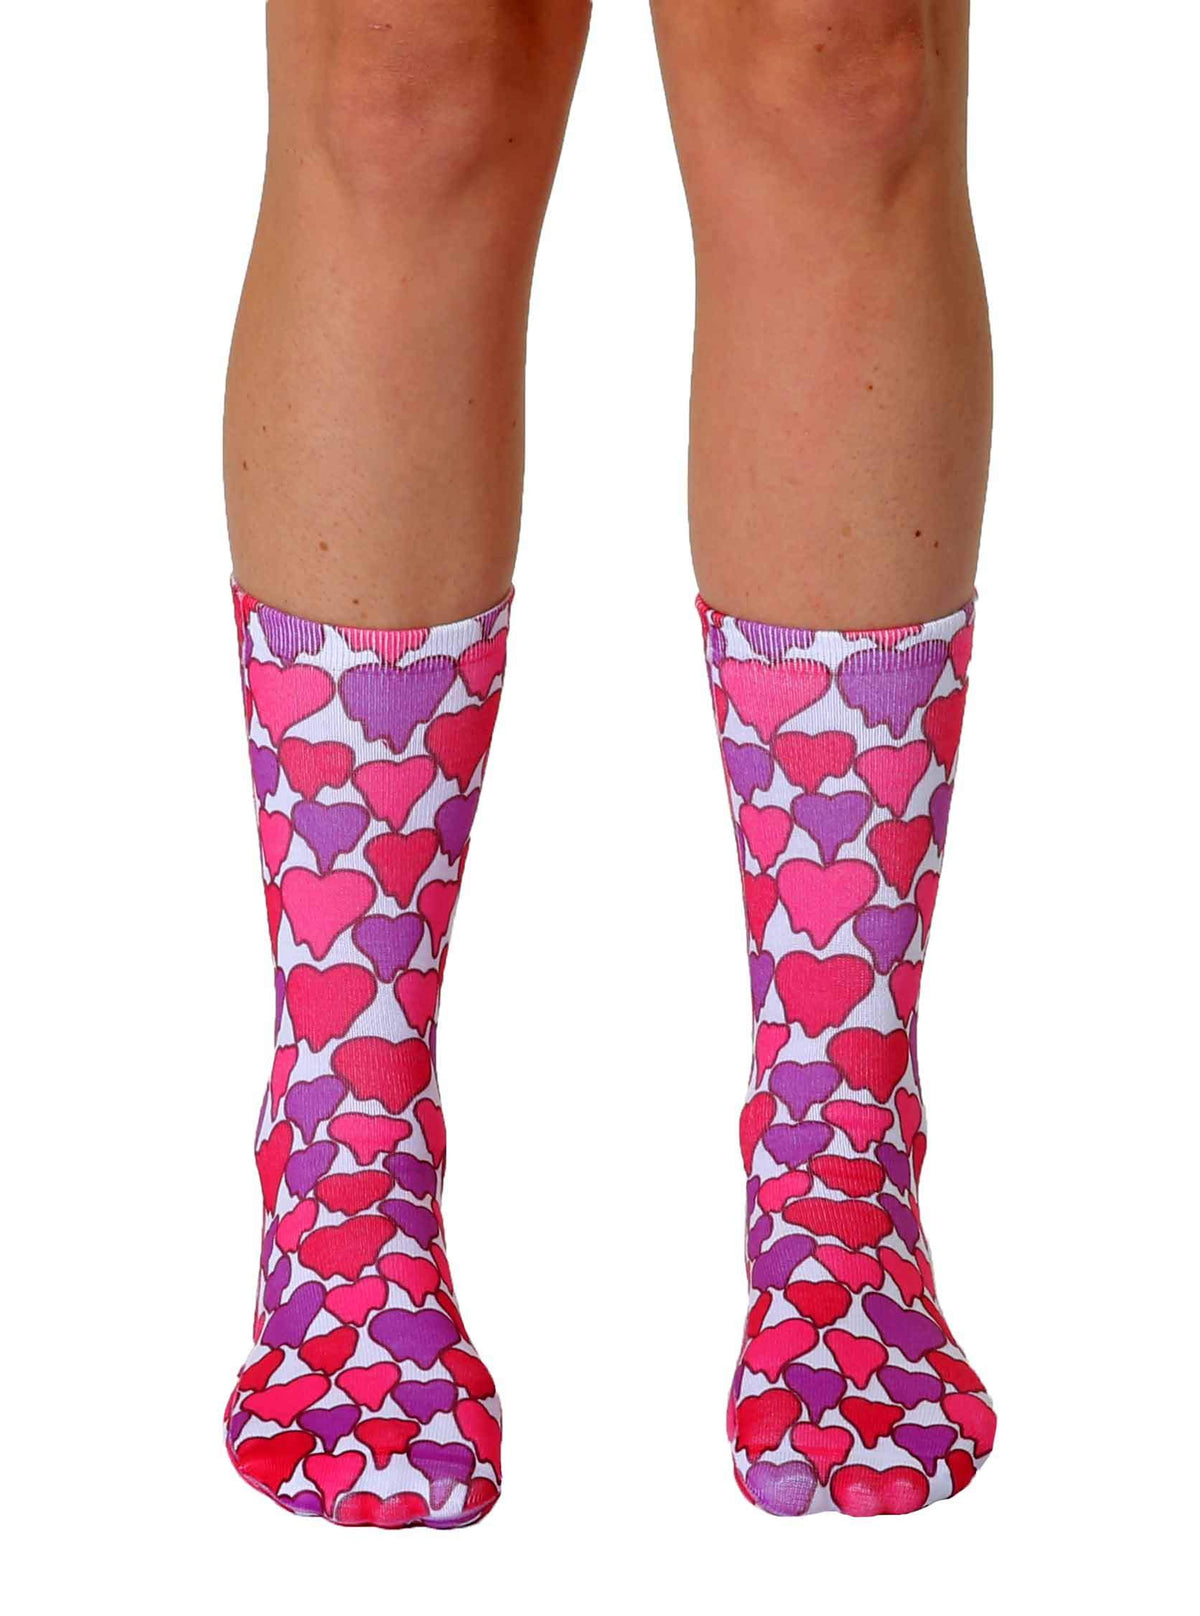 Melting Hearts Socks - Unisex Crew Sock Pink